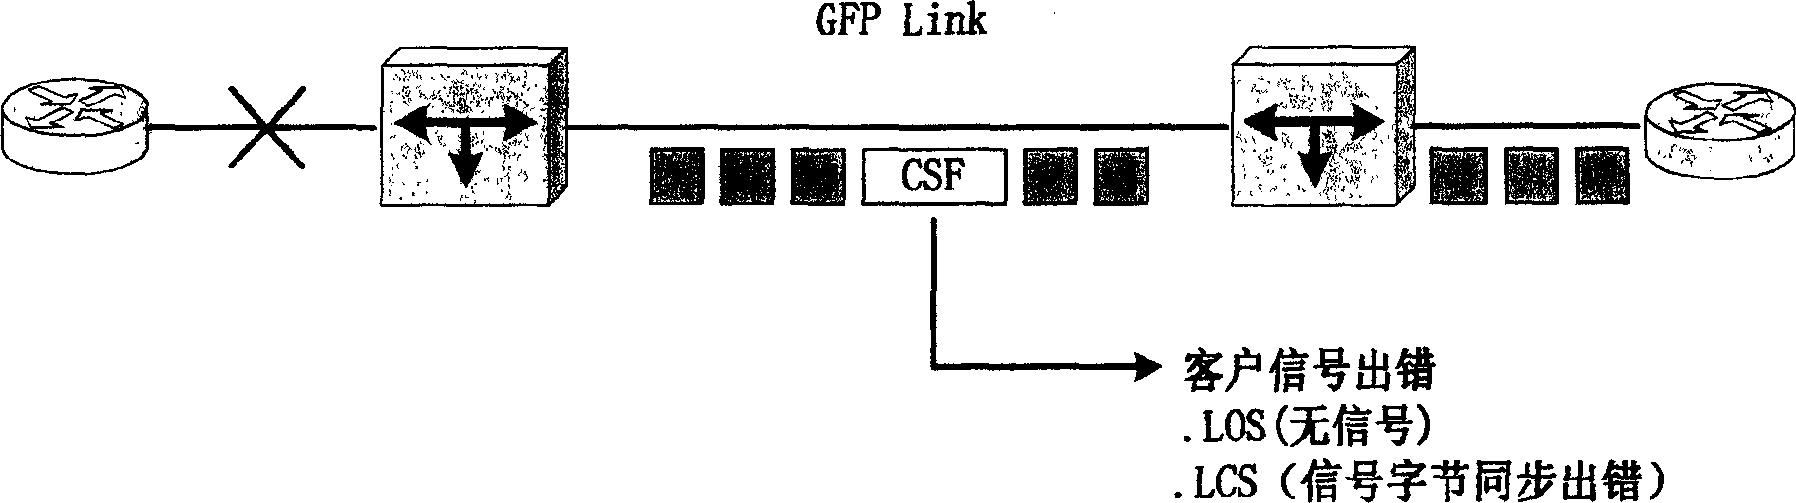 Method for transmitting network management and signaling information using Generic Framing Procedure